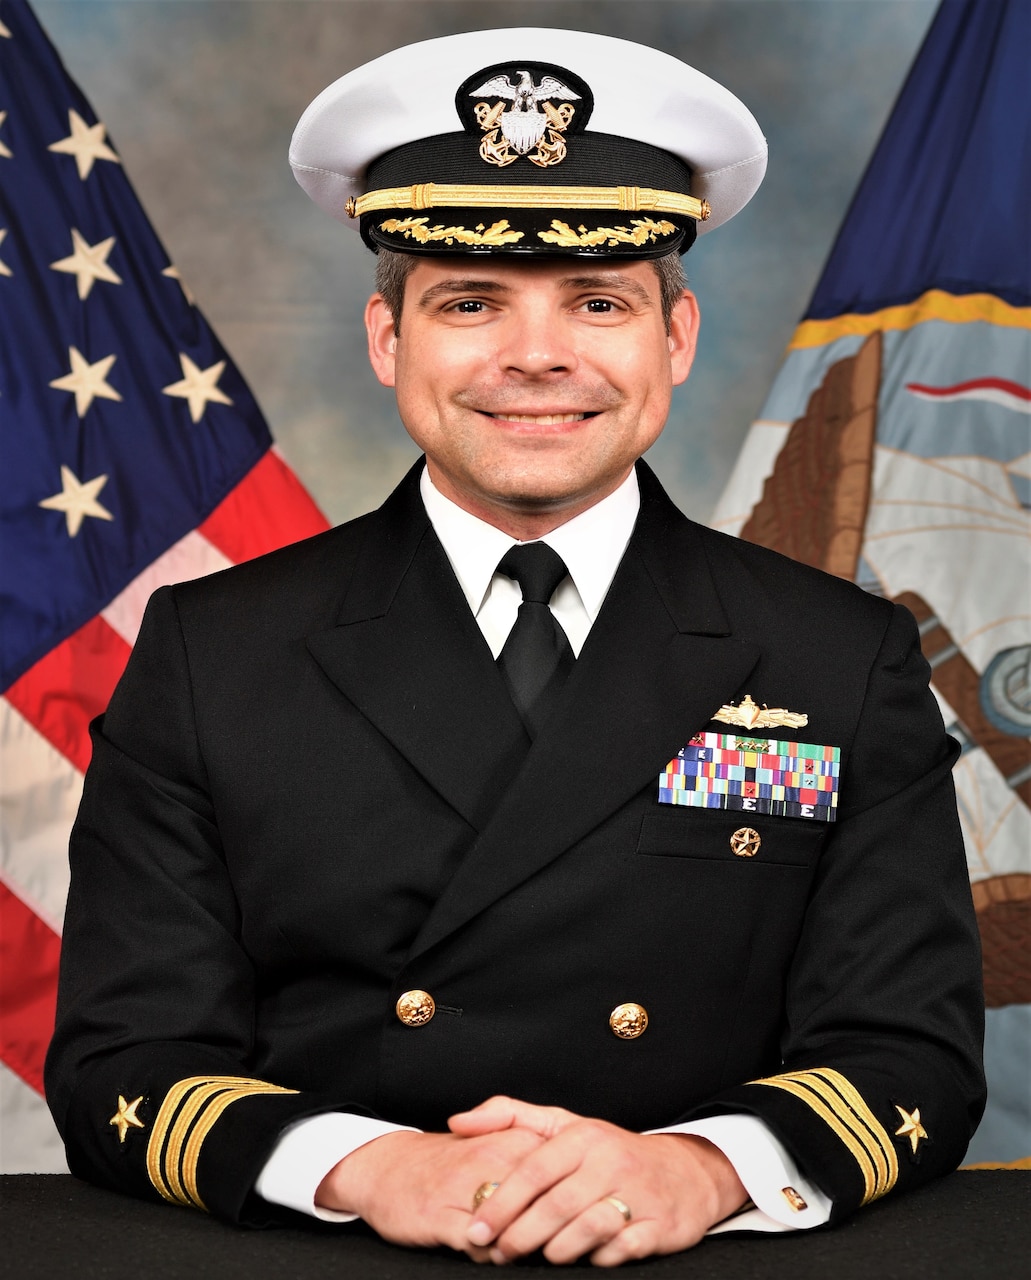 Commander Kurt Albaugh